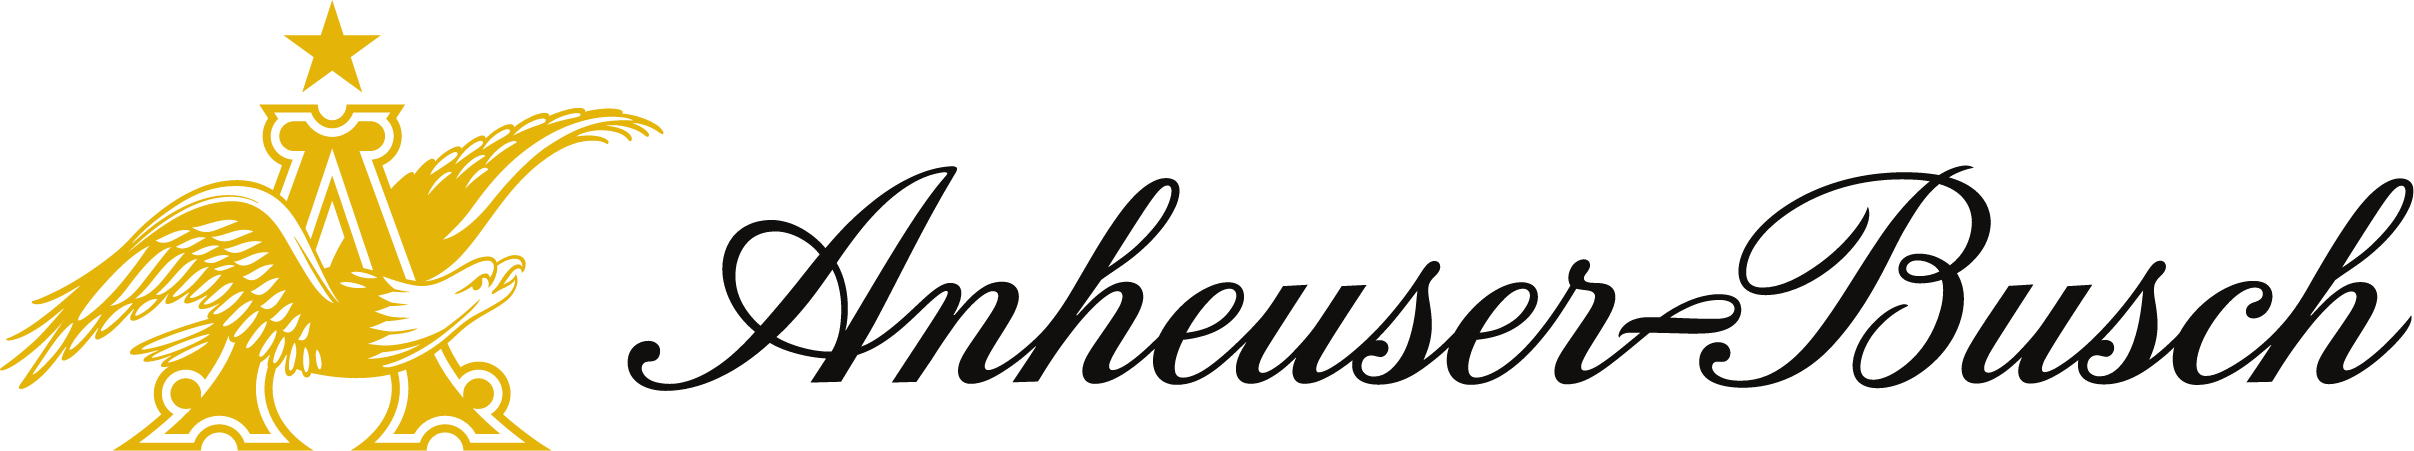 Anheuser Busch のロゴ